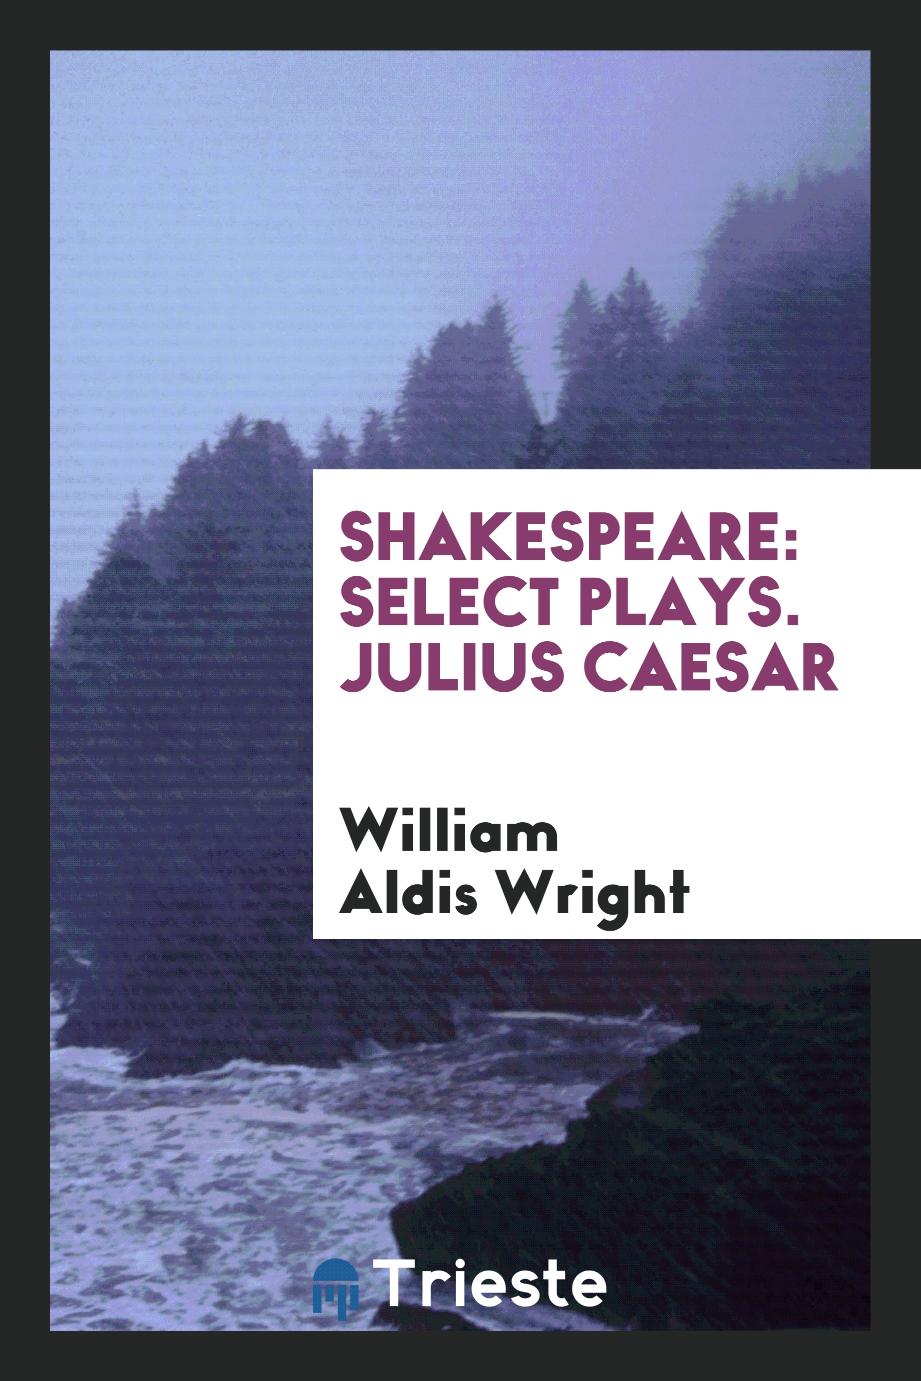 Shakespeare: Select plays. Julius Caesar